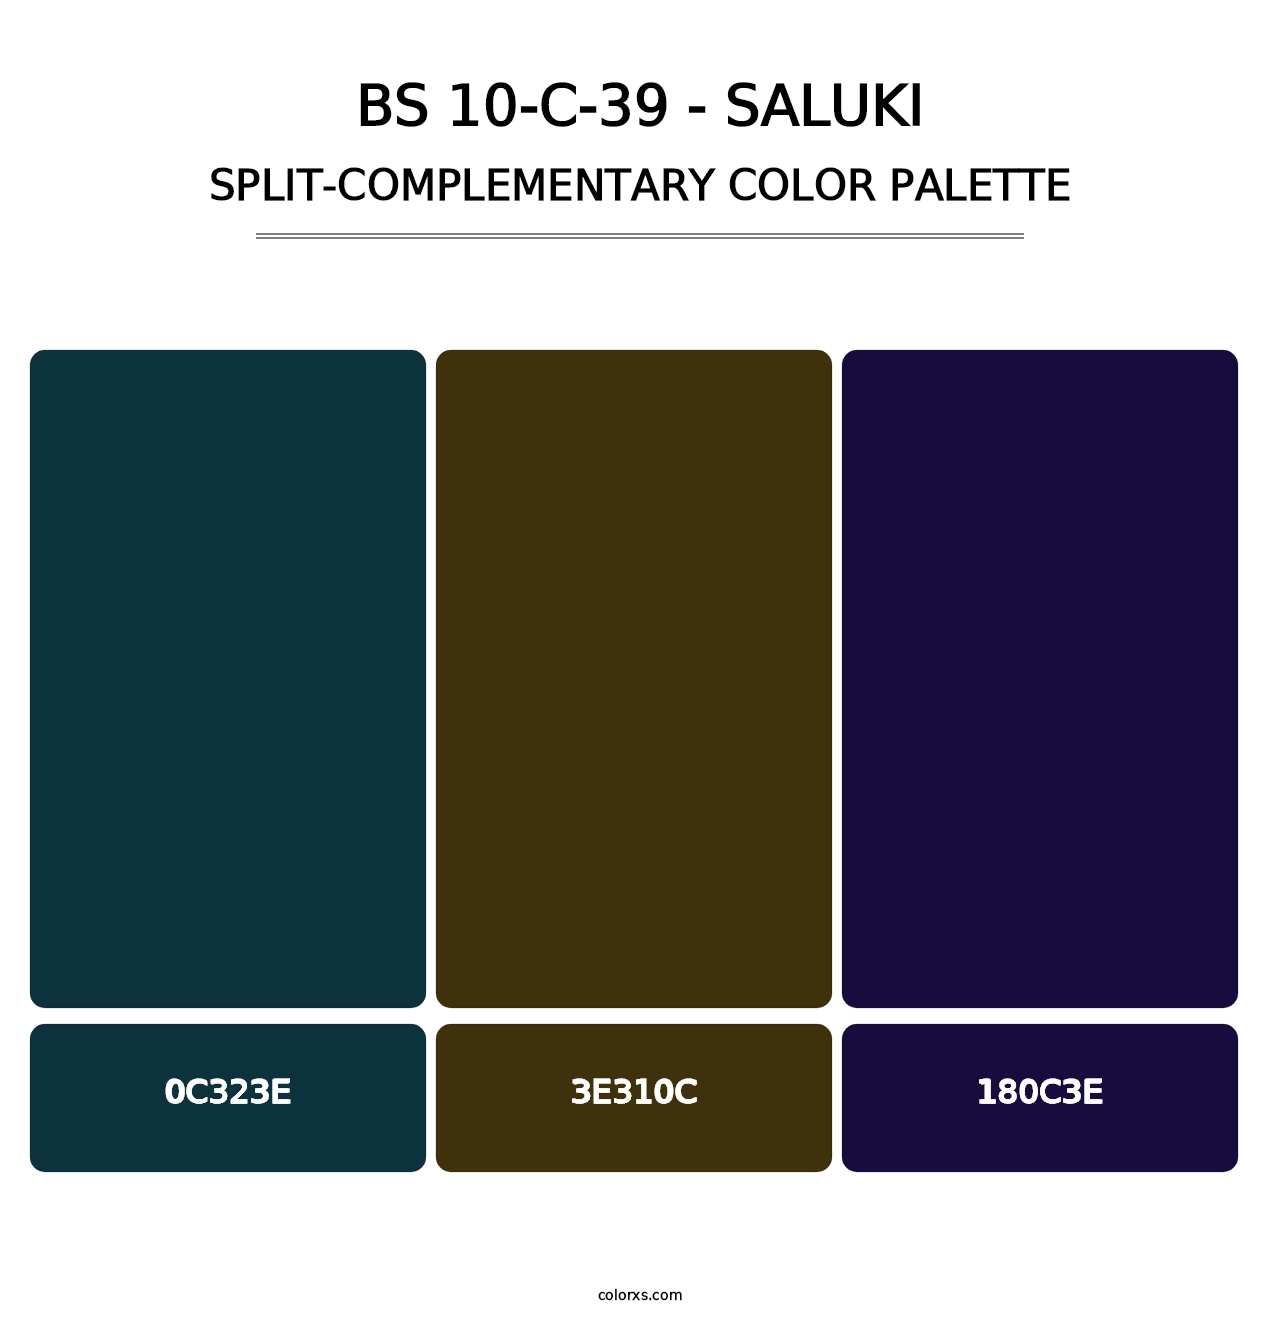 BS 10-C-39 - Saluki - Split-Complementary Color Palette